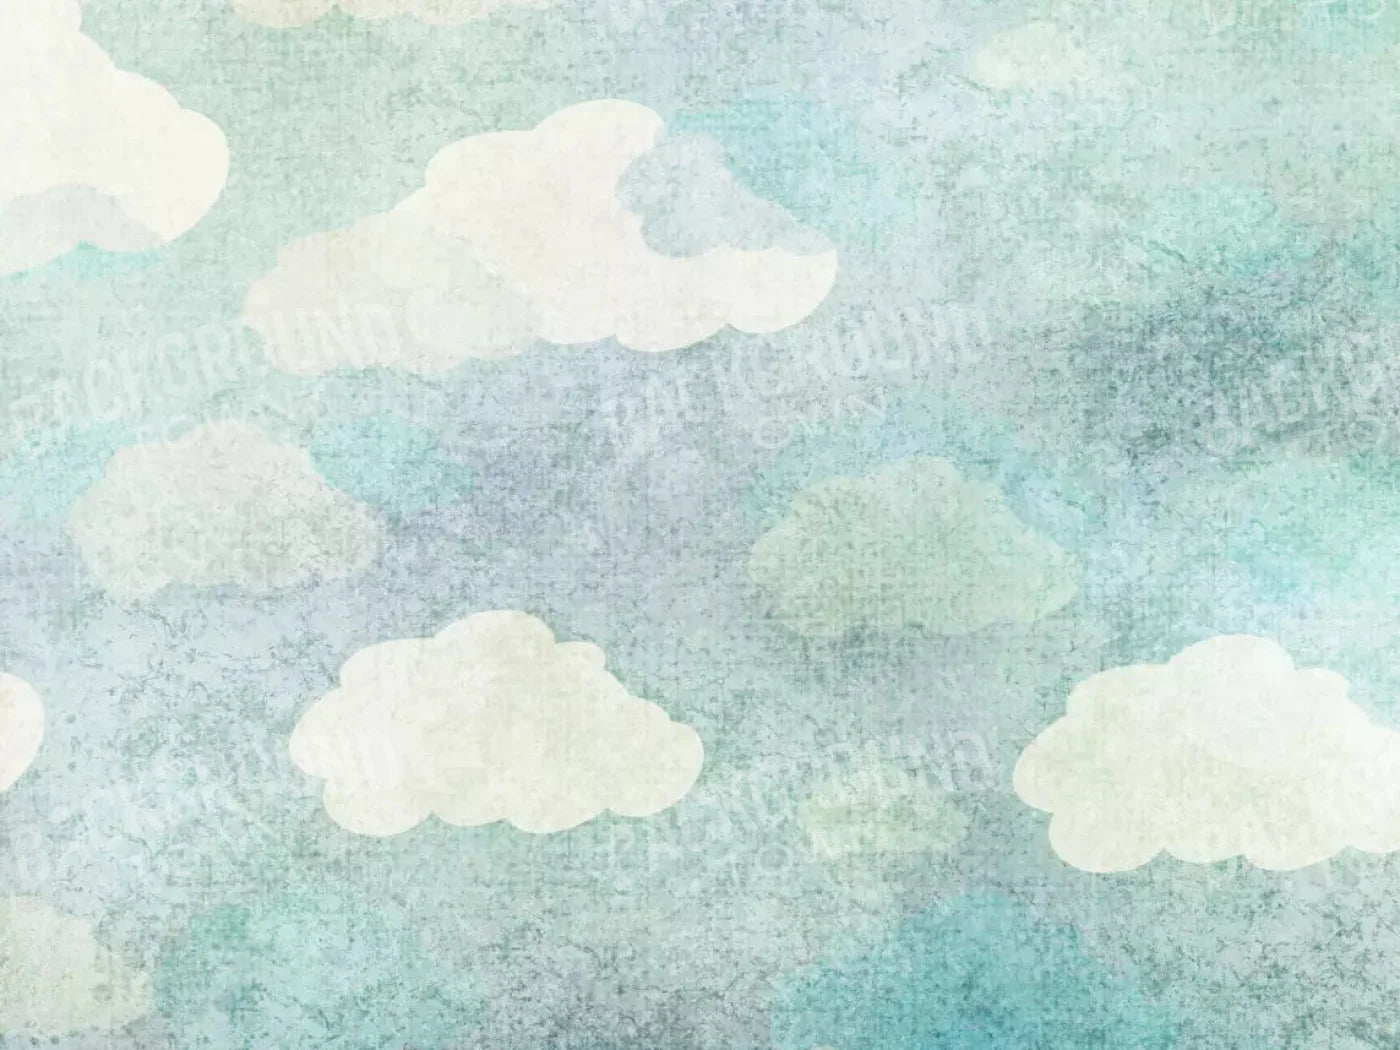 Cloudy Skies 10X8 Fleece ( 120 X 96 Inch ) Backdrop